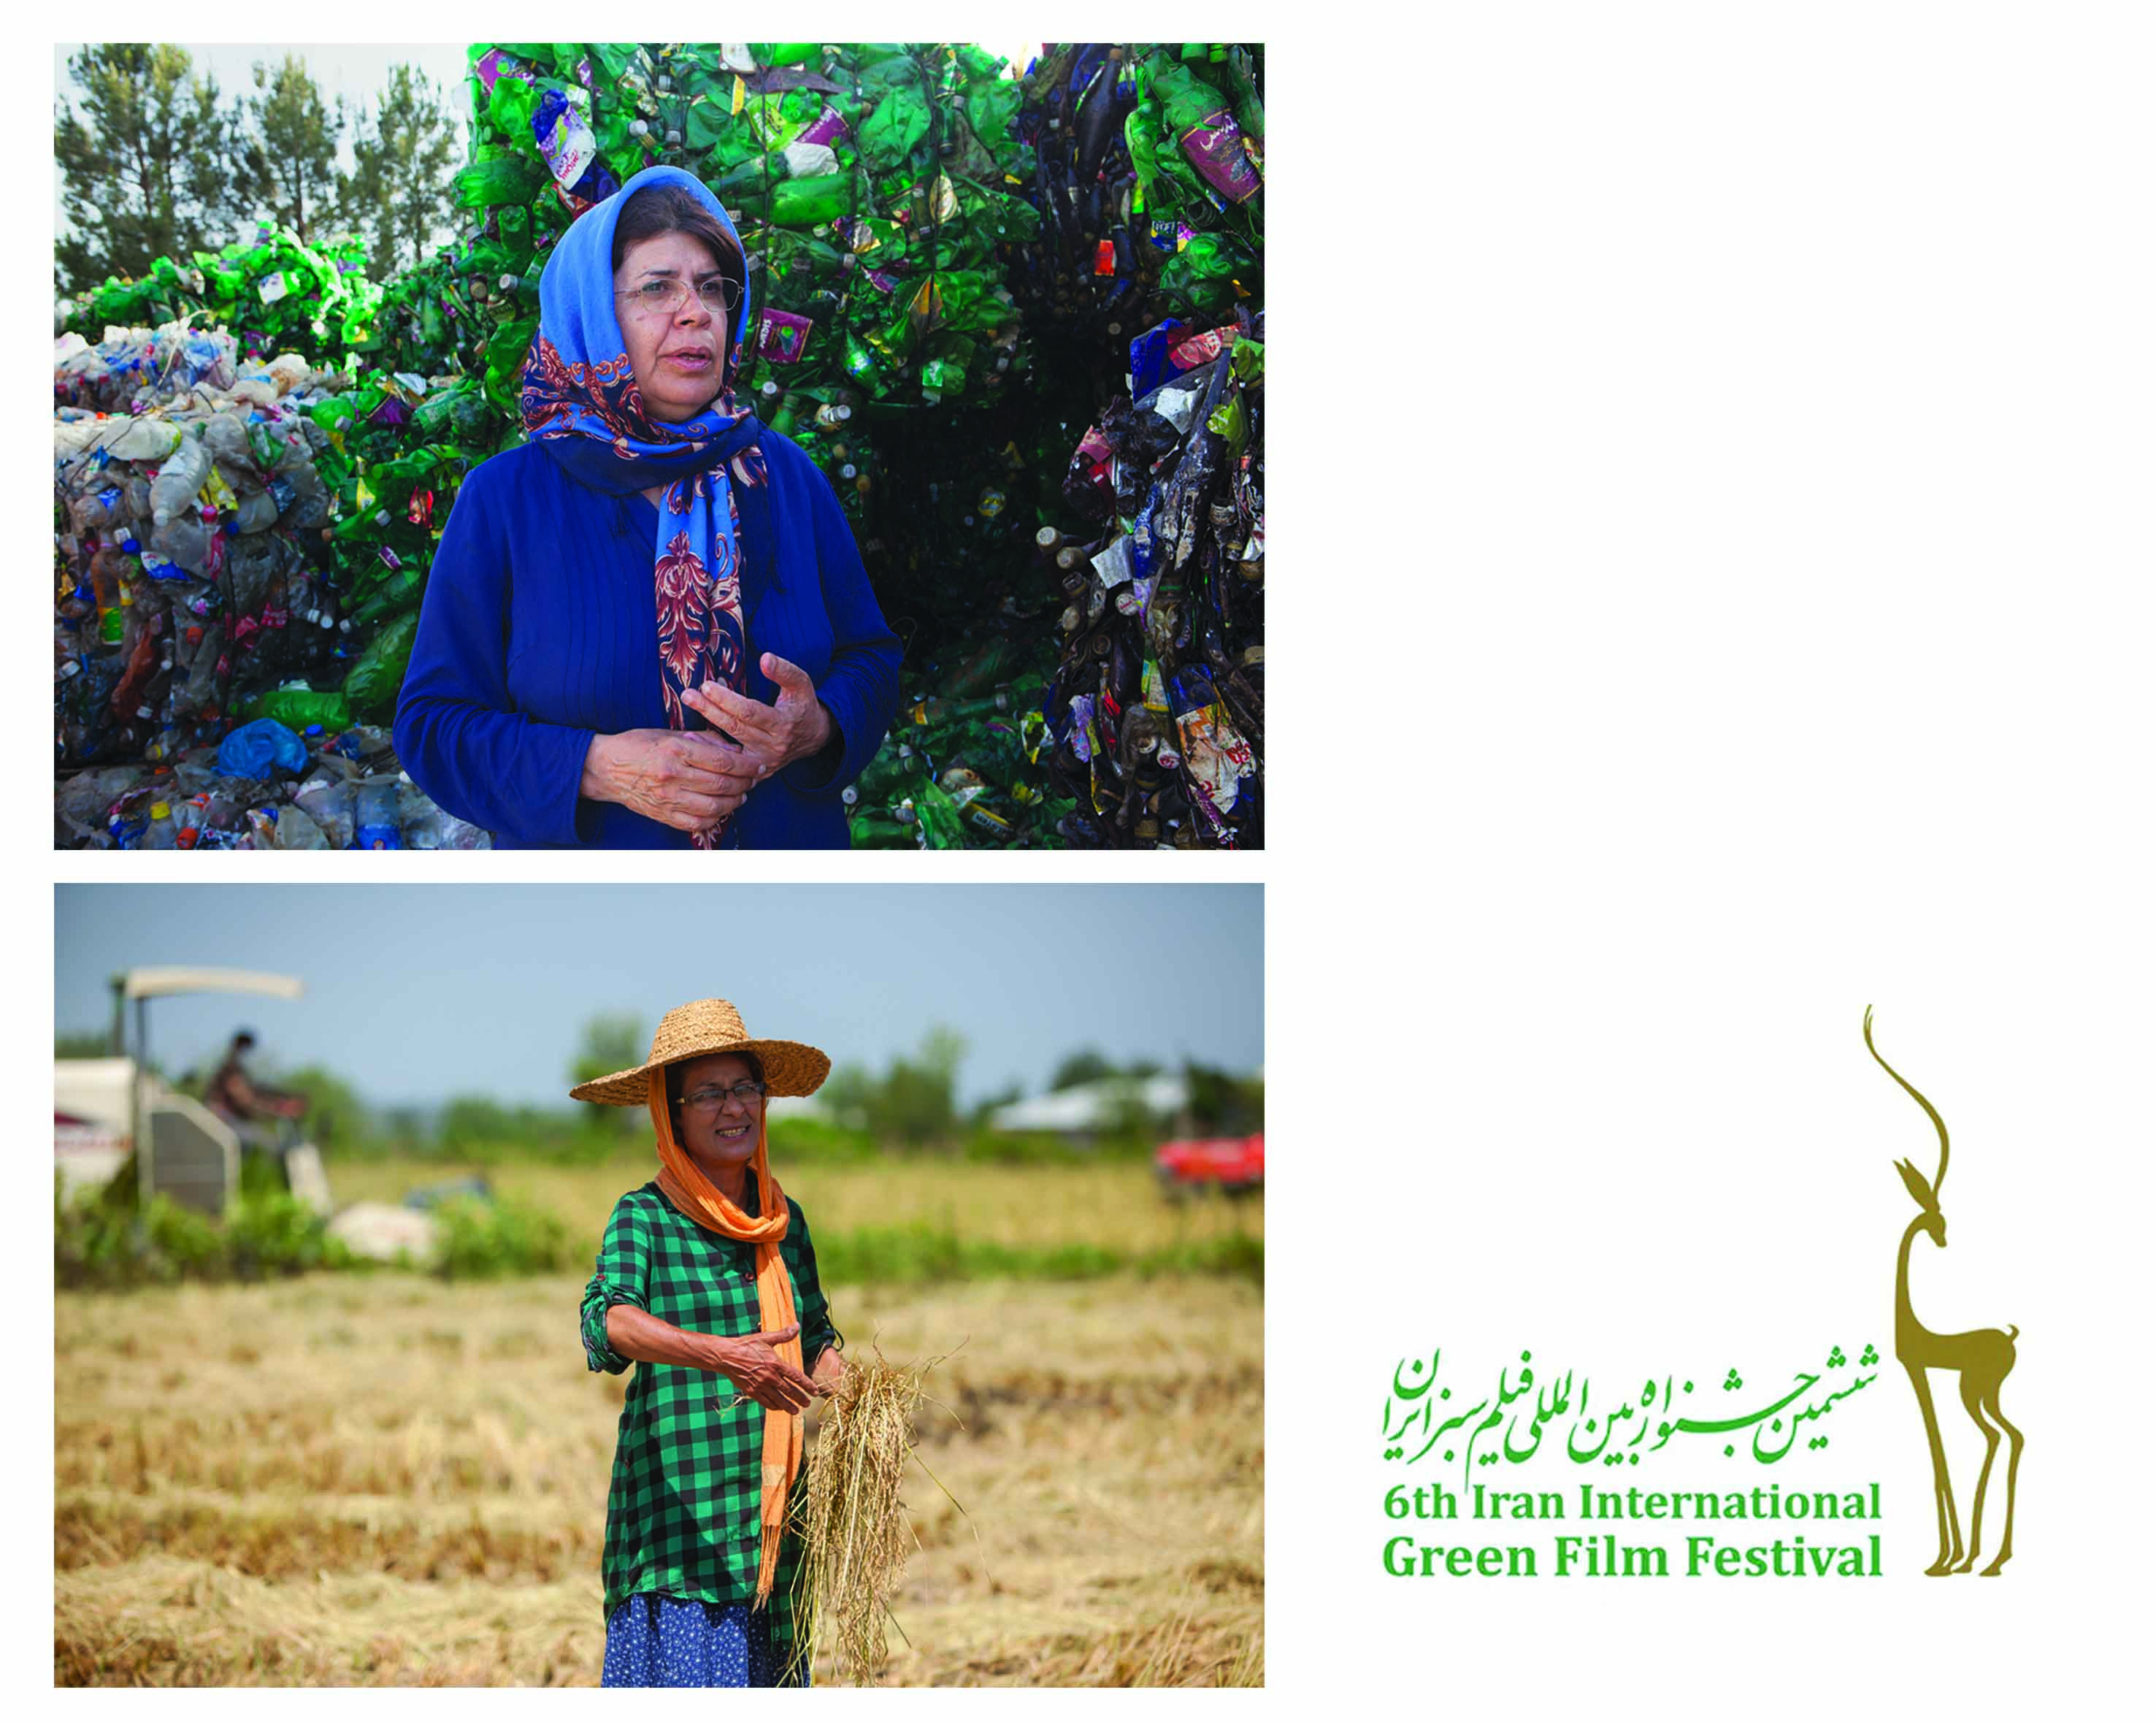 Two “Karestan” Documentaries at Green International Film Festival